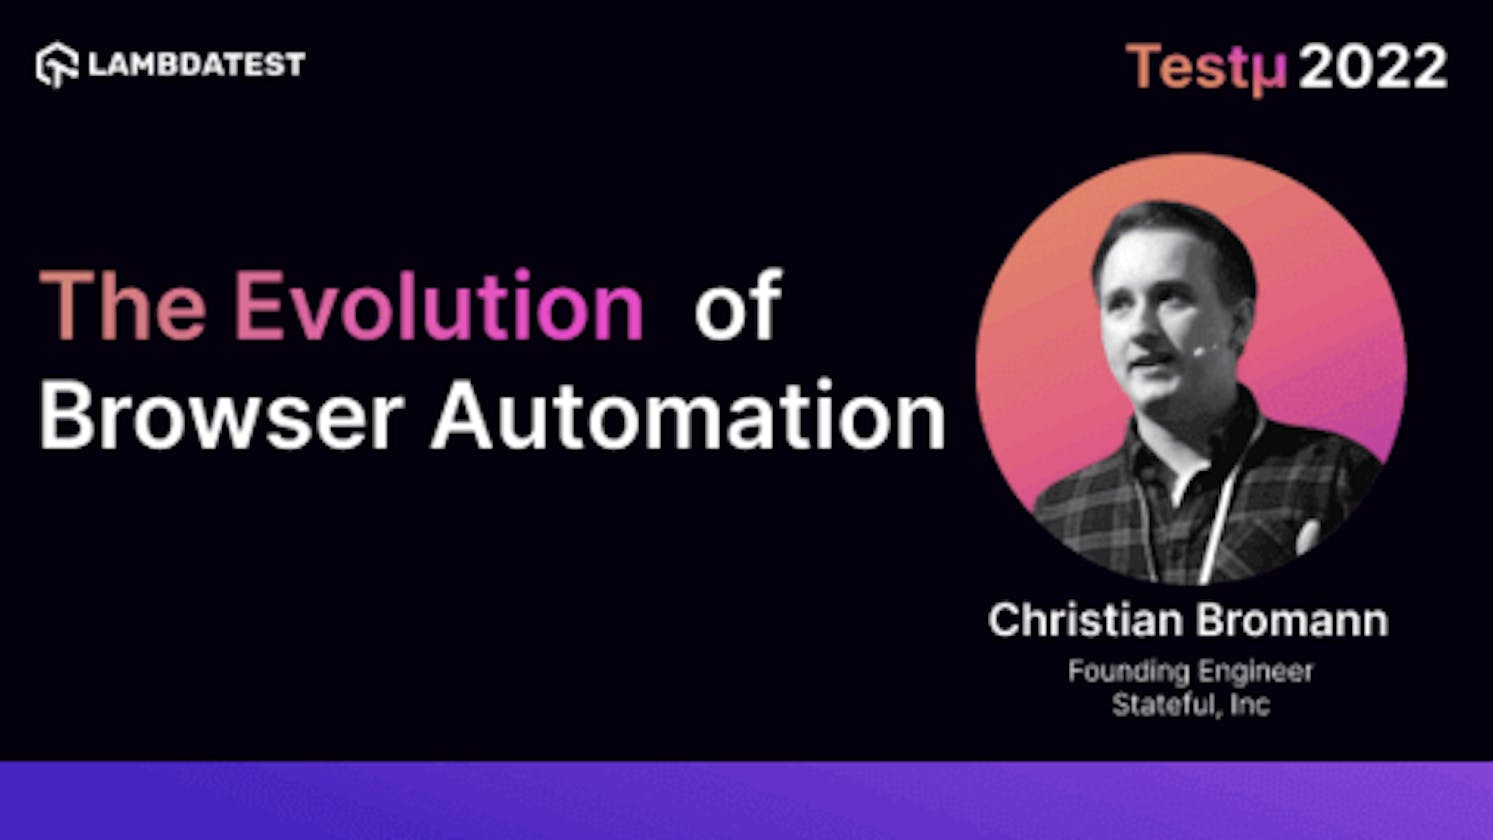 The Evolution of Browser Automation: Christian Bromann [Testμ 2022]